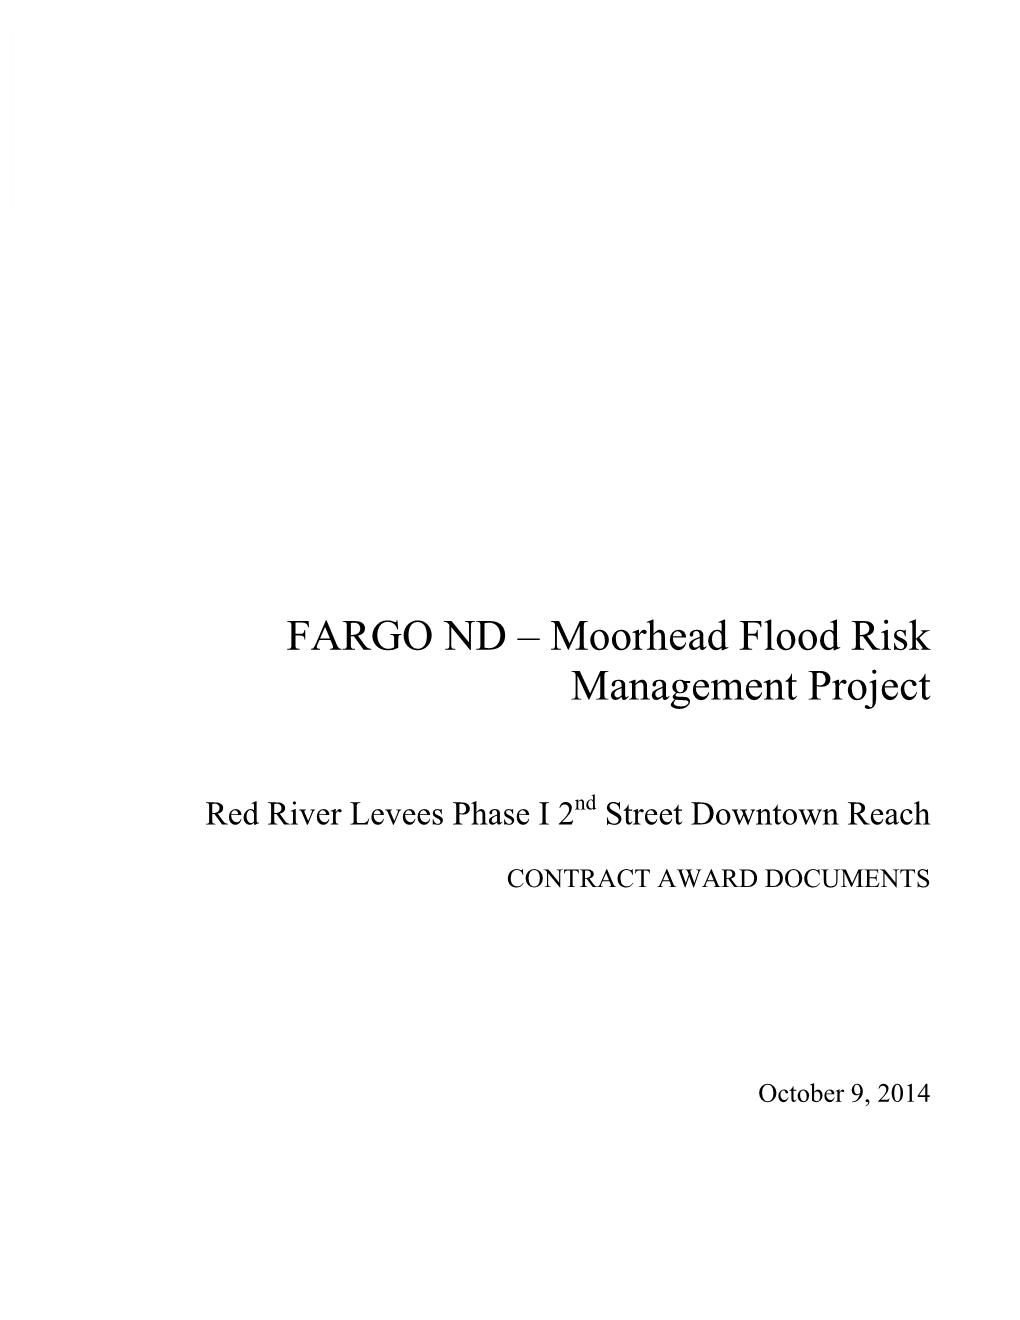 FARGO ND – Moorhead Flood Risk Management Project